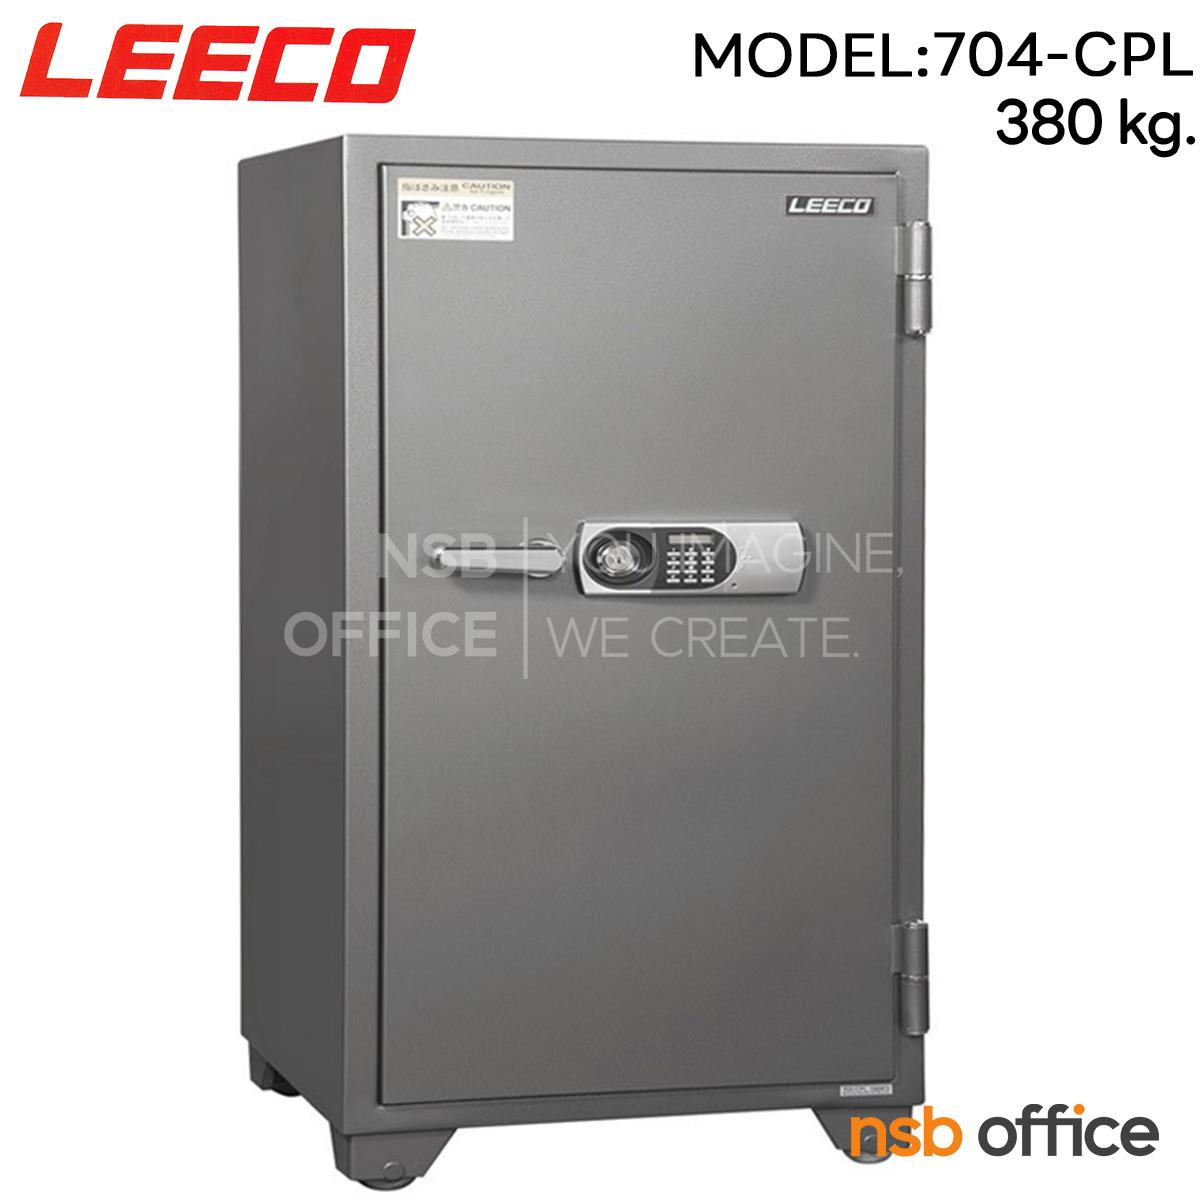 F02A074:ตู้เซฟนิรภัย 380 กก. ลิโก้ รุ่น Leeco-704-CPL (1 กุญแจ 1 รหัส)   